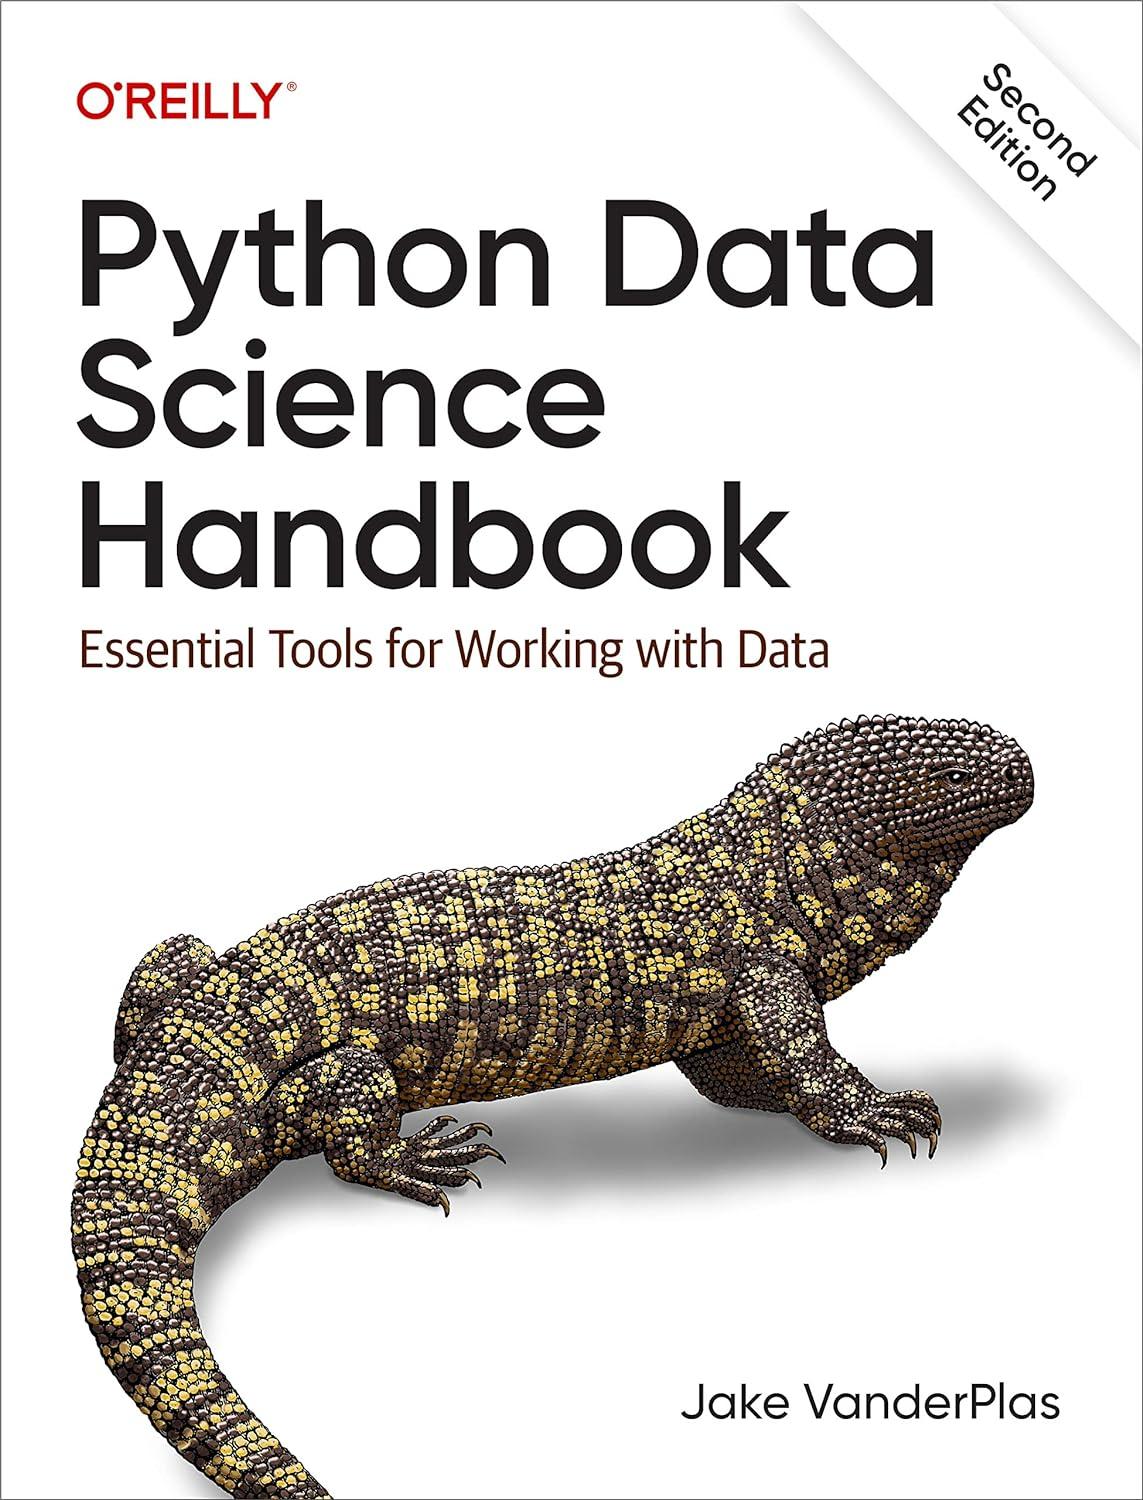 python data science handbook essential tools for working with data 2nd edition jake vanderplas 1098121228,